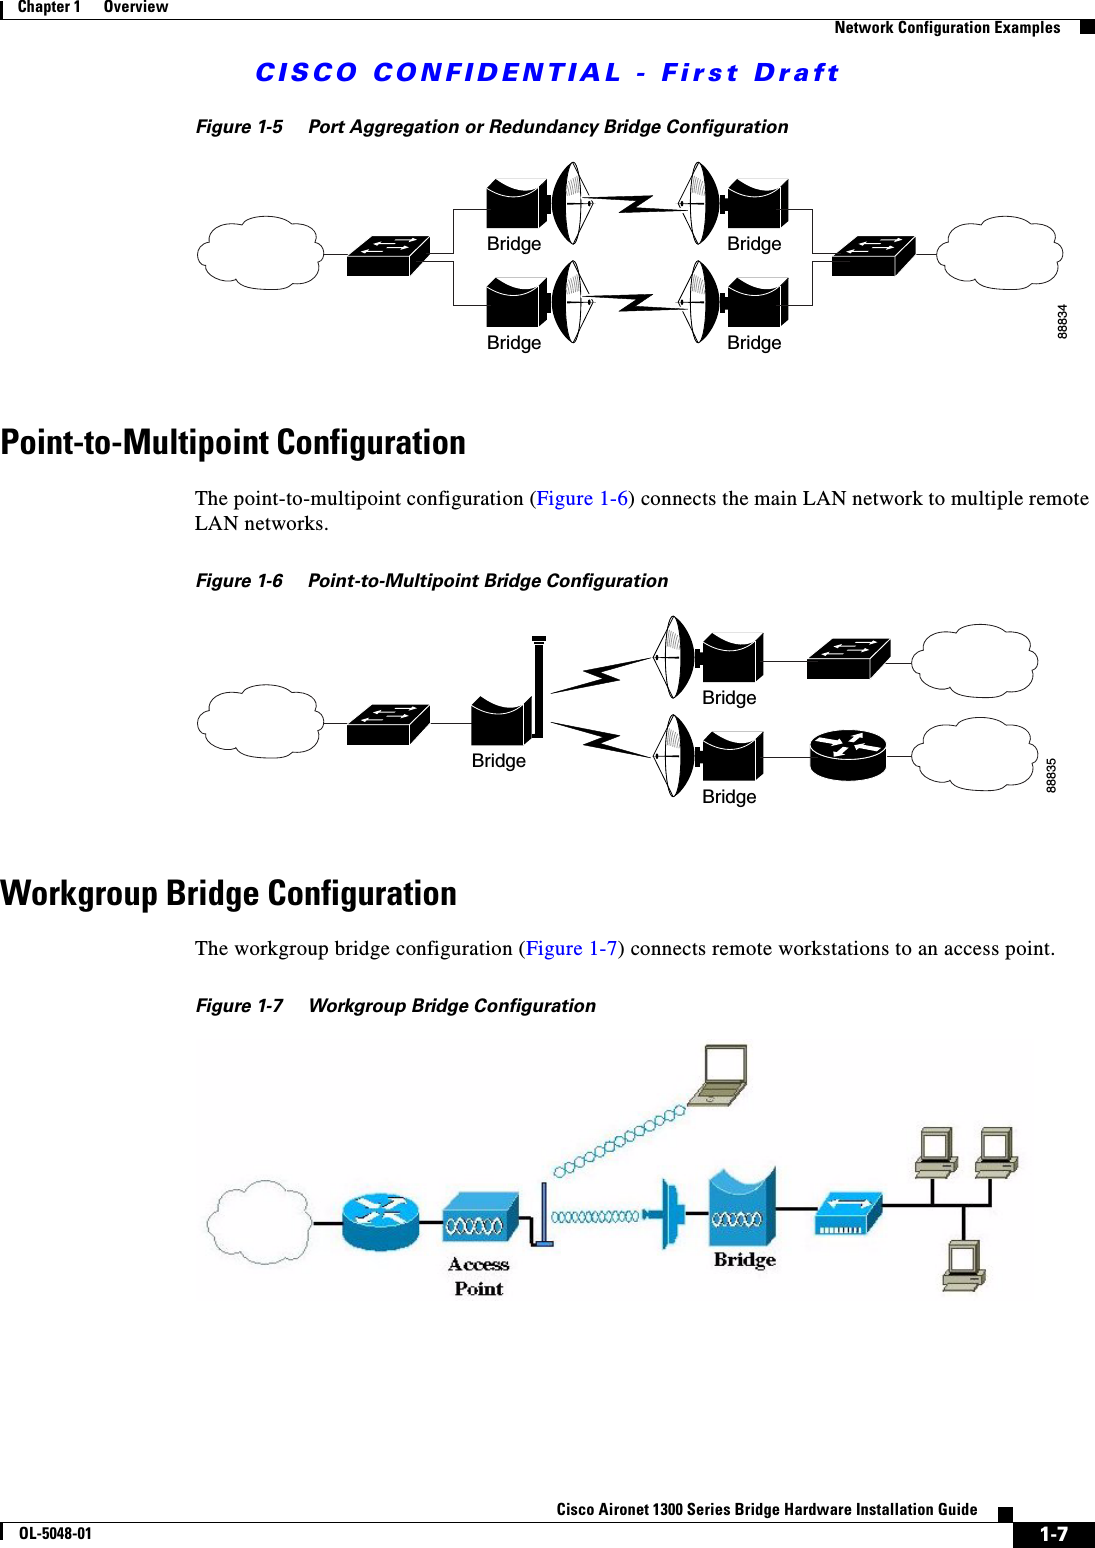 CISCO CONFIDENTIAL - First Draft1-7Cisco Aironet 1300 Series Bridge Hardware Installation GuideOL-5048-01Chapter 1      OverviewNetwork Configuration ExamplesFigure 1-5 Port Aggregation or Redundancy Bridge ConfigurationPoint-to-Multipoint ConfigurationThe point-to-multipoint configuration (Figure 1-6) connects the main LAN network to multiple remote LAN networks.Figure 1-6 Point-to-Multipoint Bridge ConfigurationWorkgroup Bridge ConfigurationThe workgroup bridge configuration (Figure 1-7) connects remote workstations to an access point.Figure 1-7 Workgroup Bridge Configuration88834Bridge BridgeBridge Bridge88835BridgeBridgeBridge